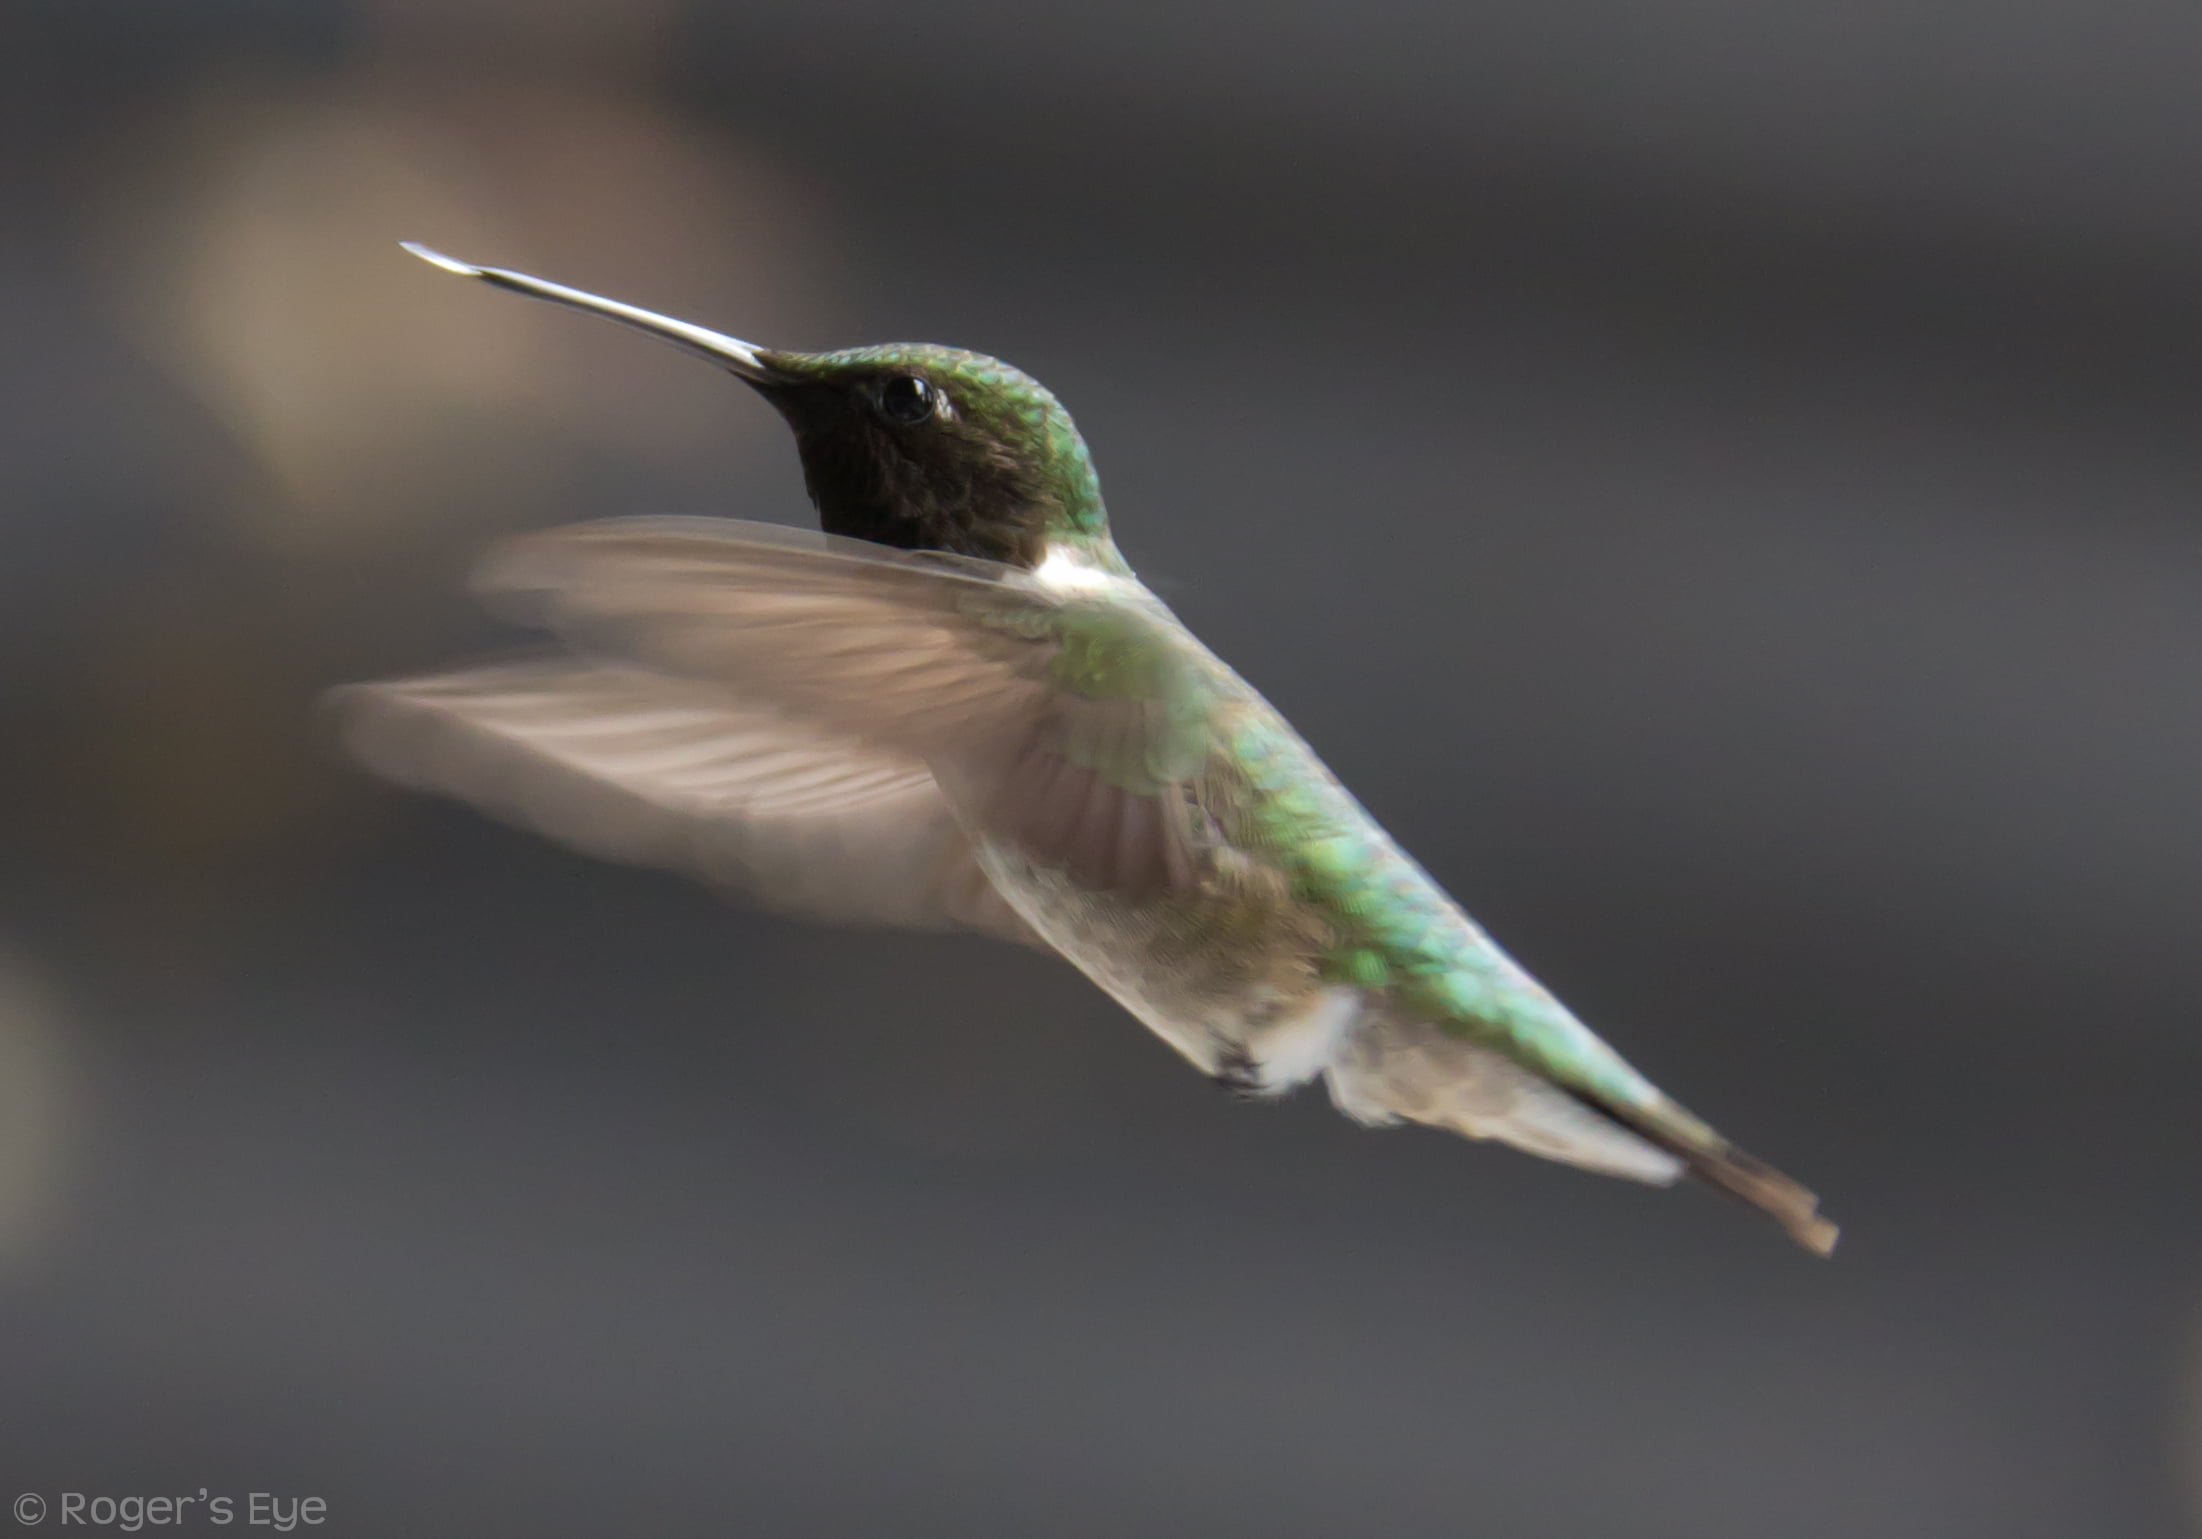 green and gray hummingbird, Cottage, humming  birds, haliburton